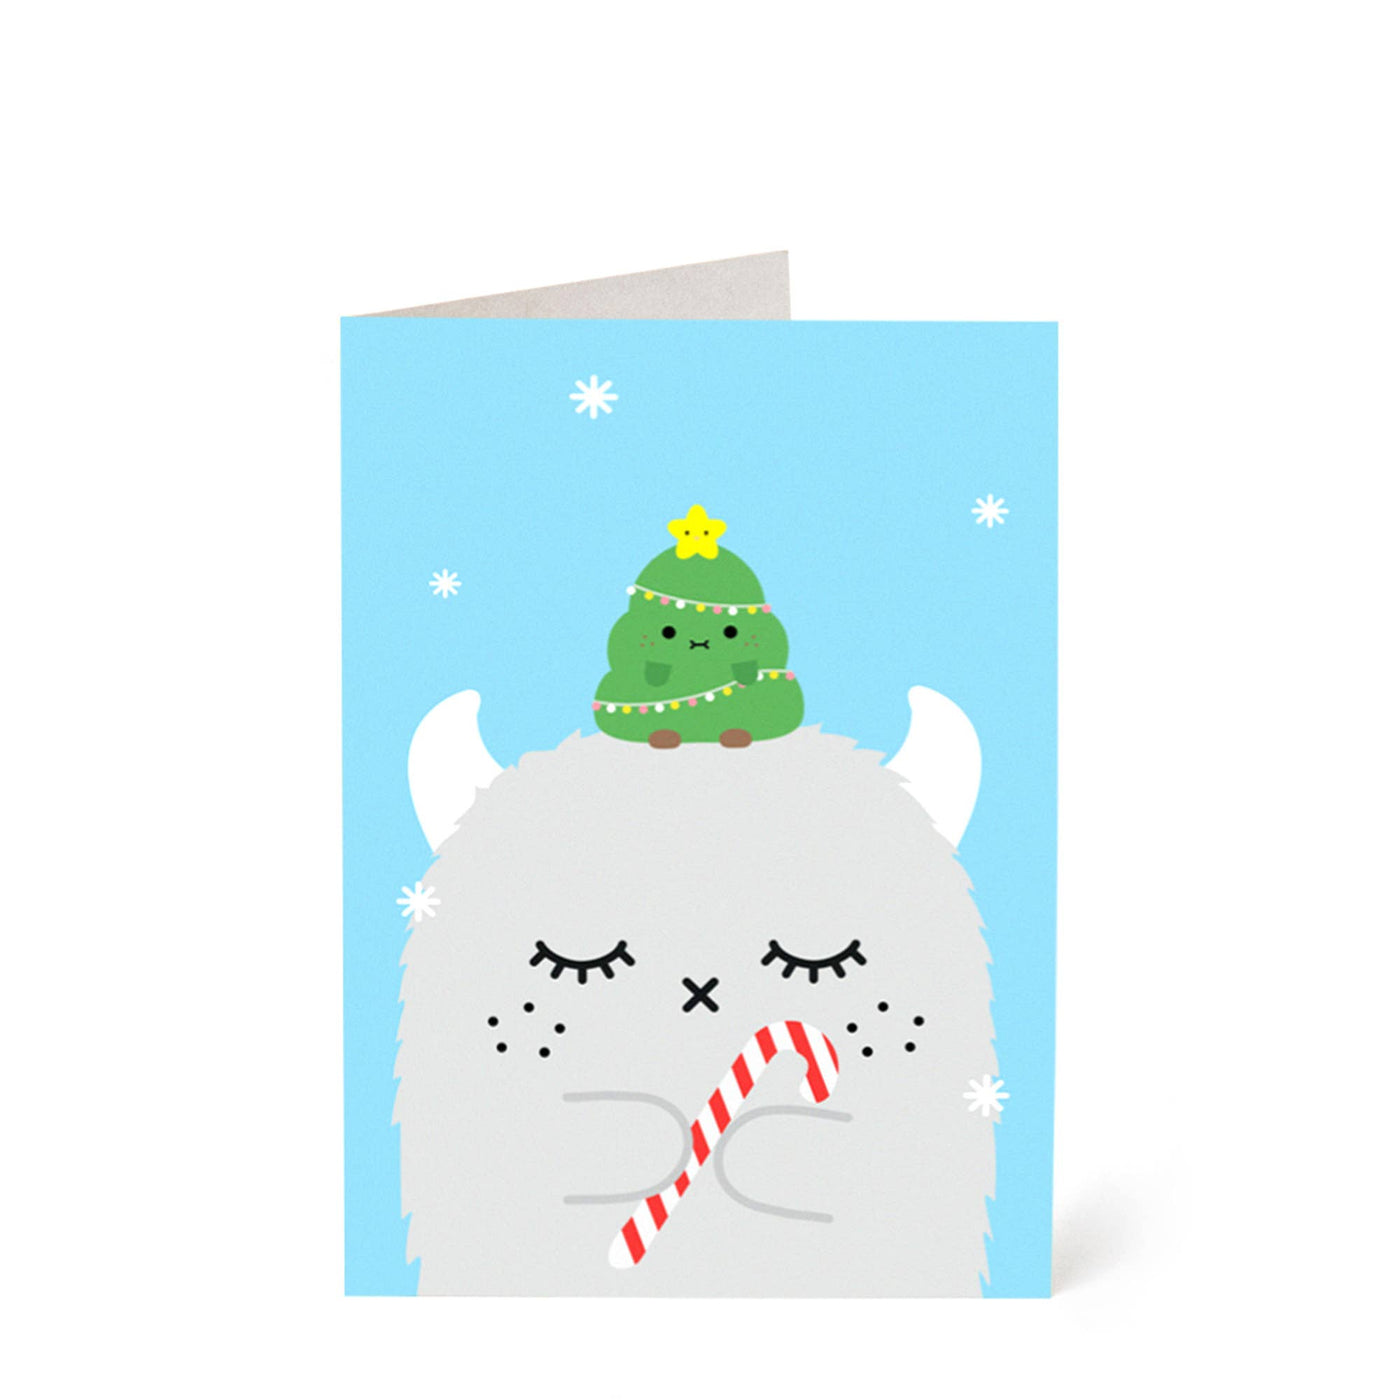 Christmas Greeting Card - Ricepuffy Snow Monster